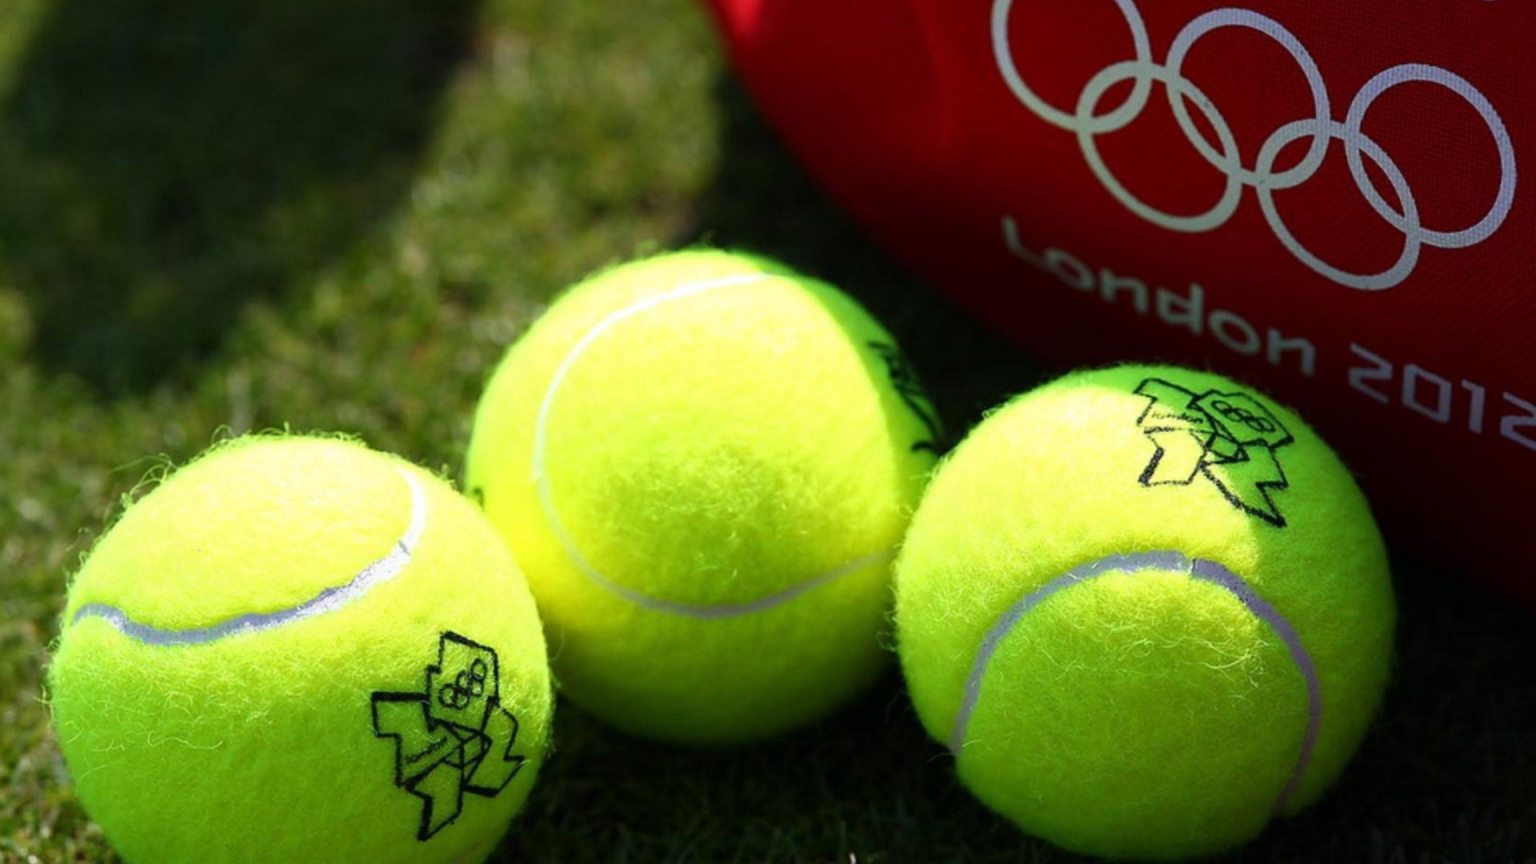 London 2012 Olympics Tennis Balls for 1536 x 864 HDTV resolution